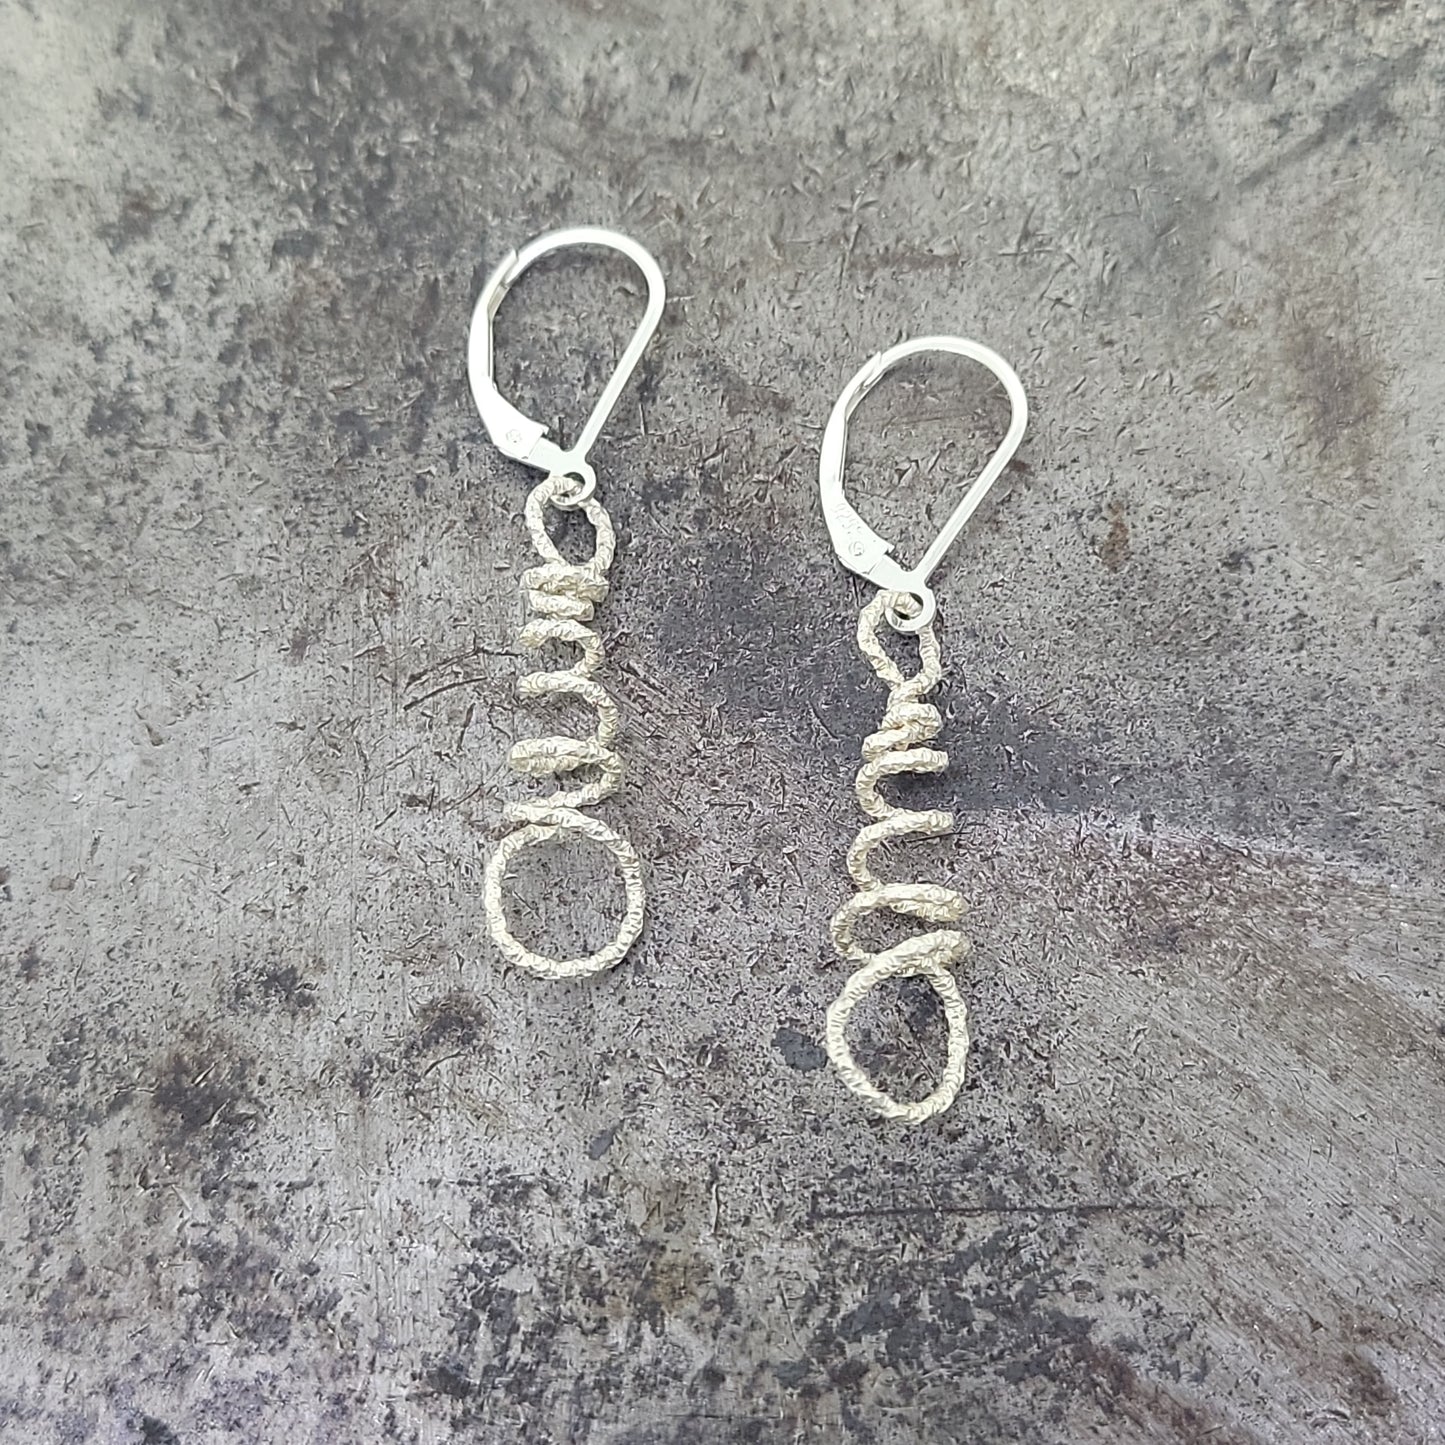 Handmade Sterling Silver Earrings